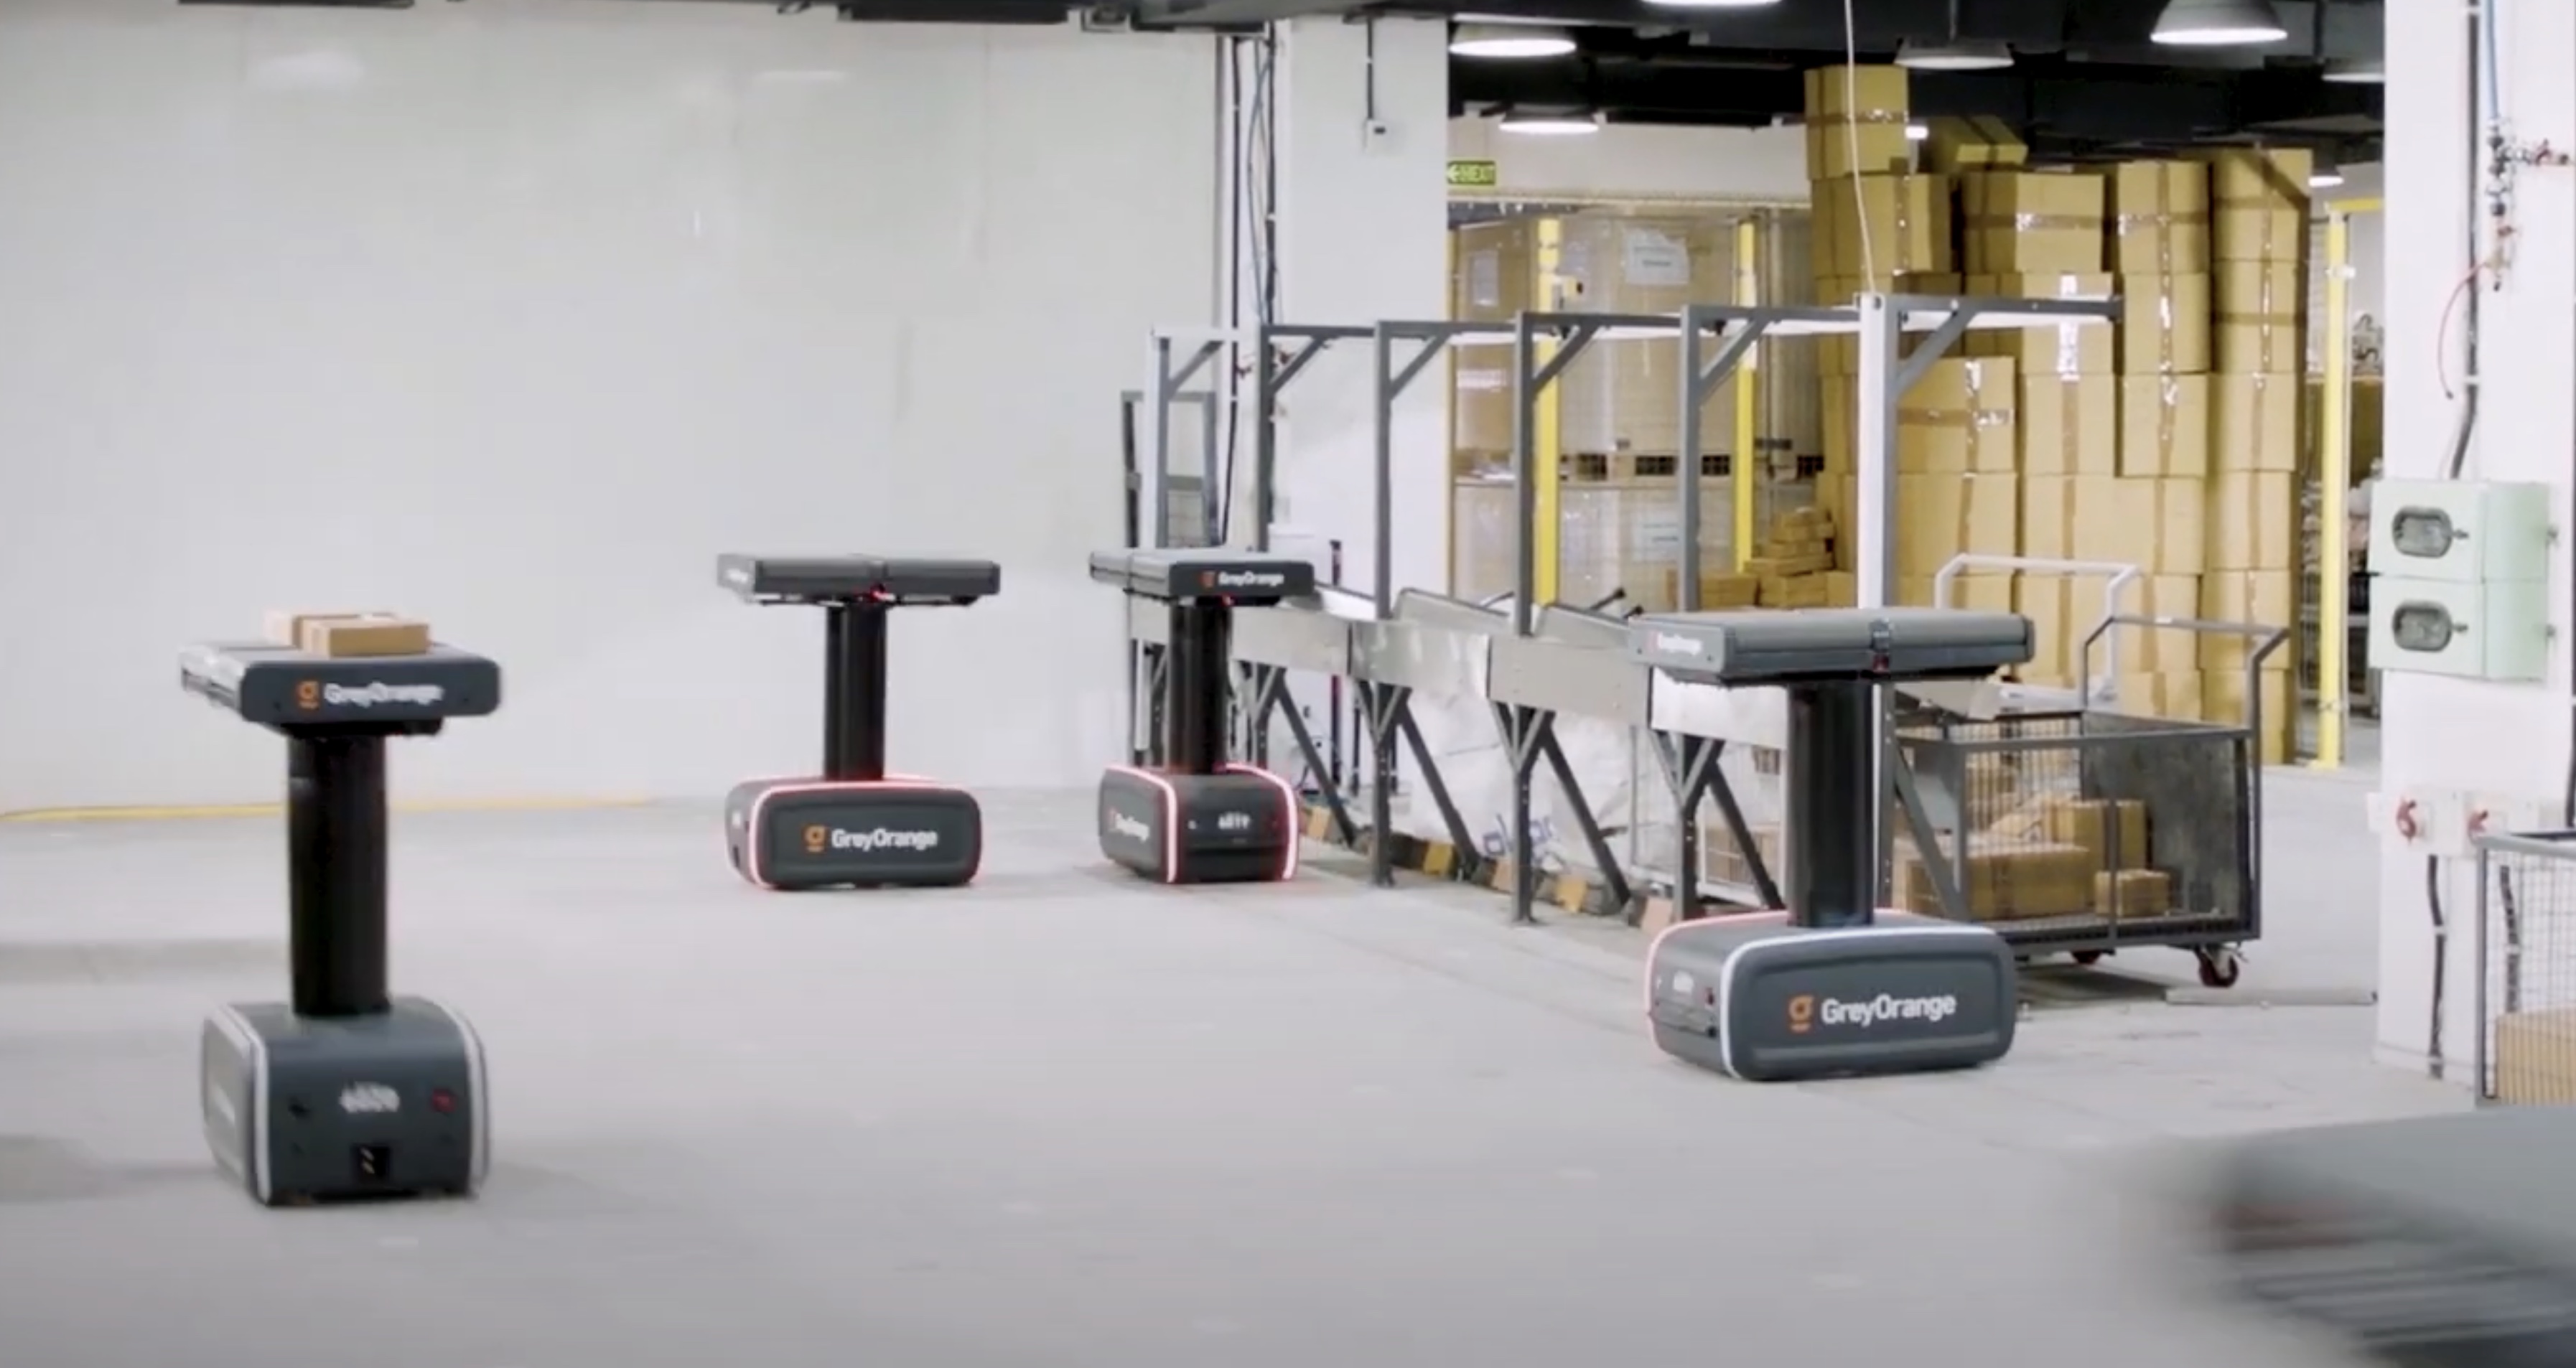 techcrunch.com - Brian Heater - Warehouse robotics firm GreyOrange raises $110M via growth financing